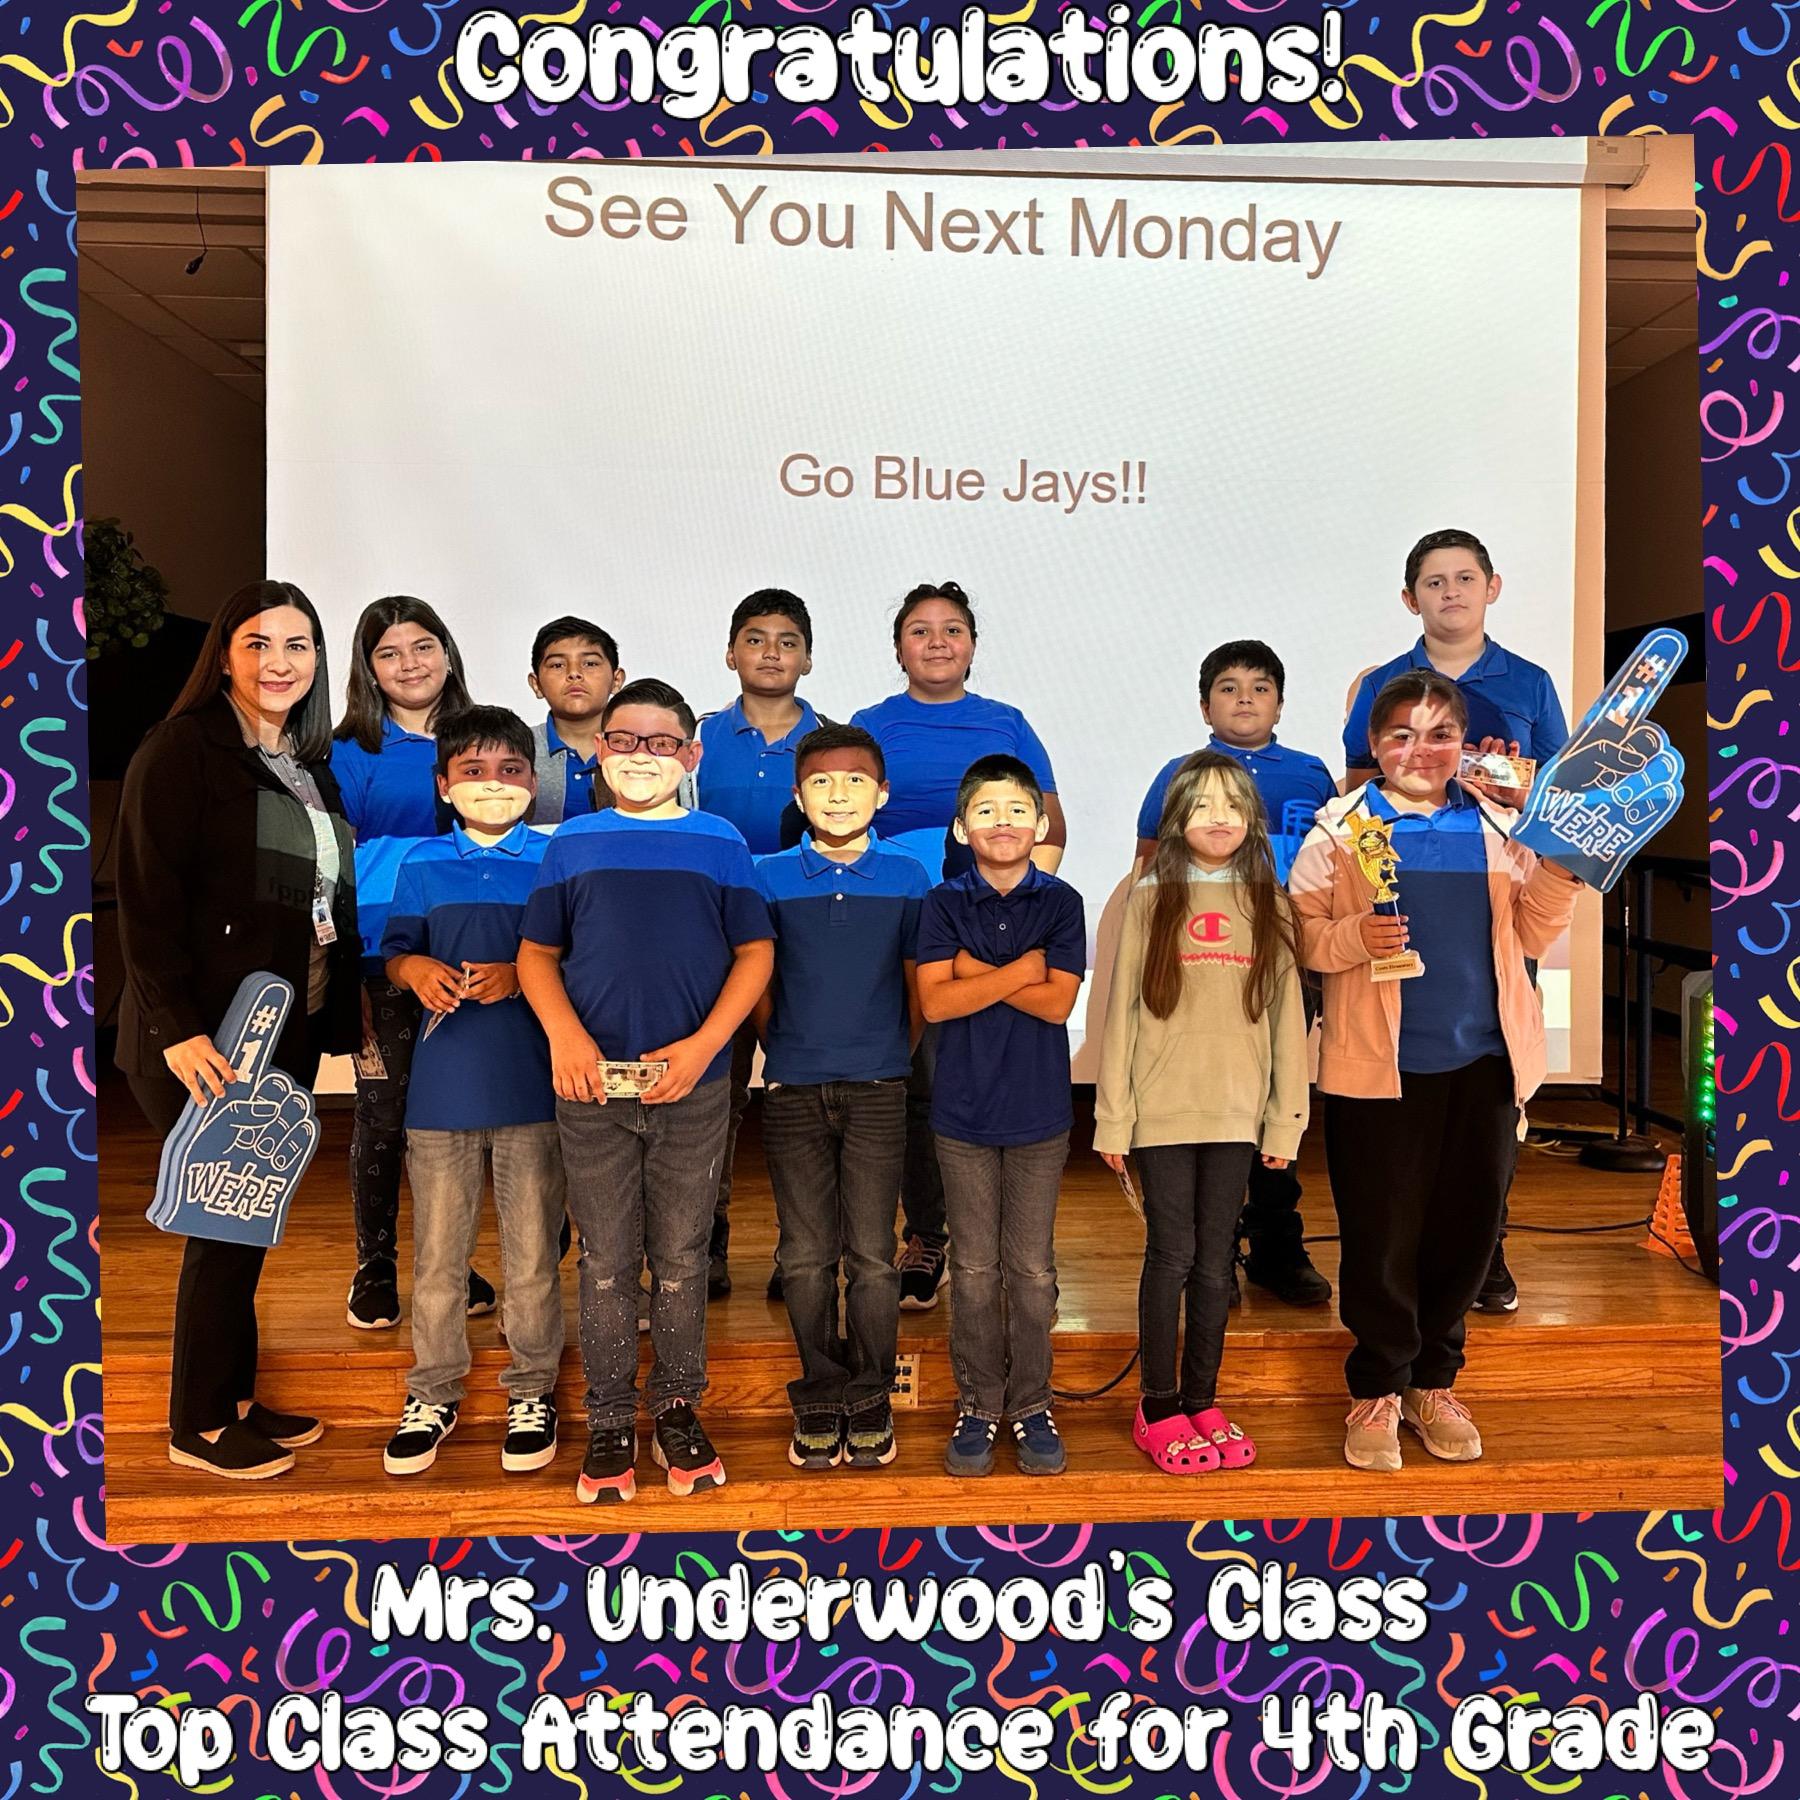 4th grade - Underwood